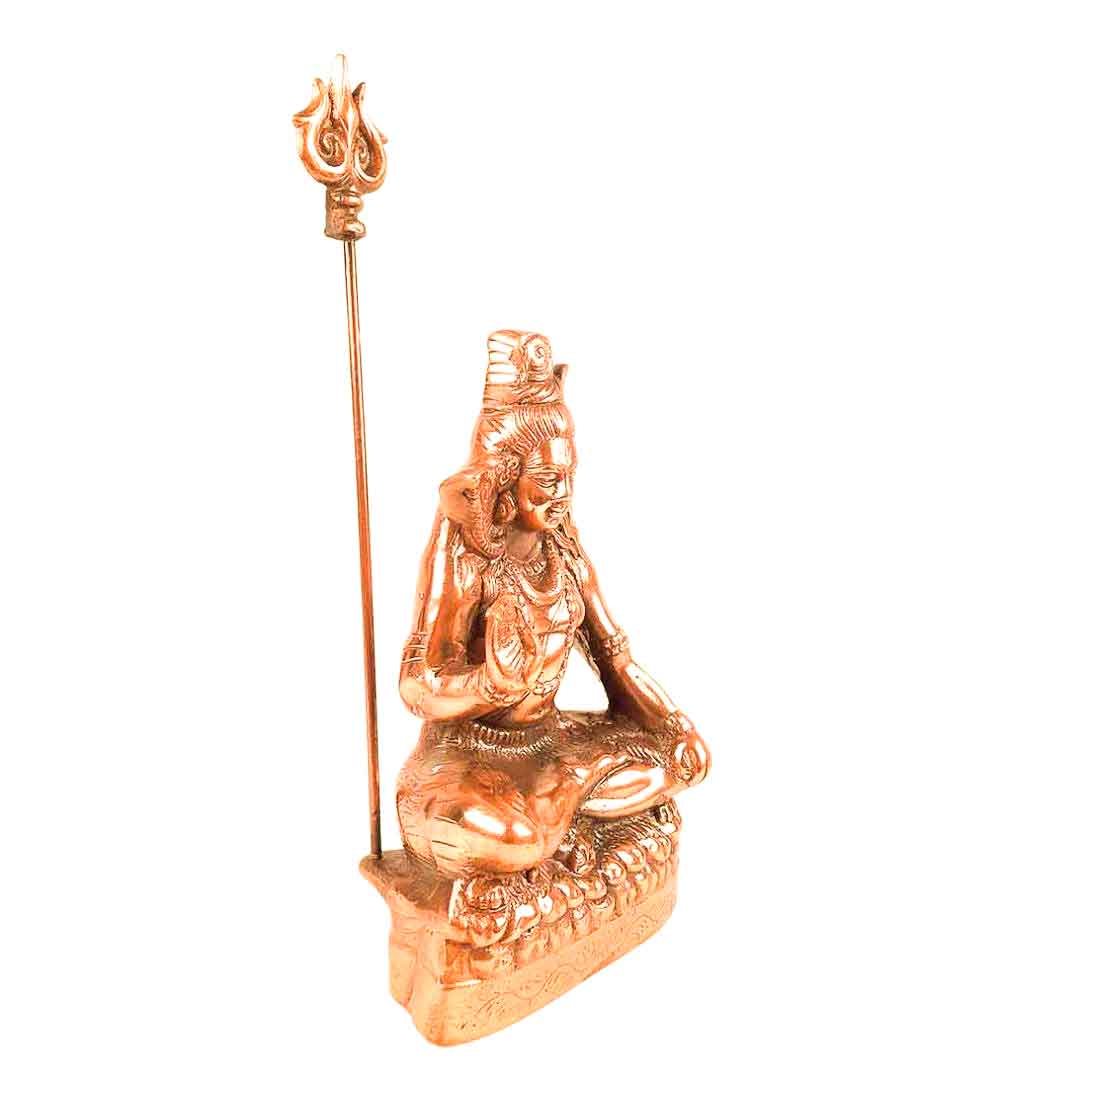 Lord Shiva Statue - For Pooja & Home Decor - 15 Inch - ApkaMart